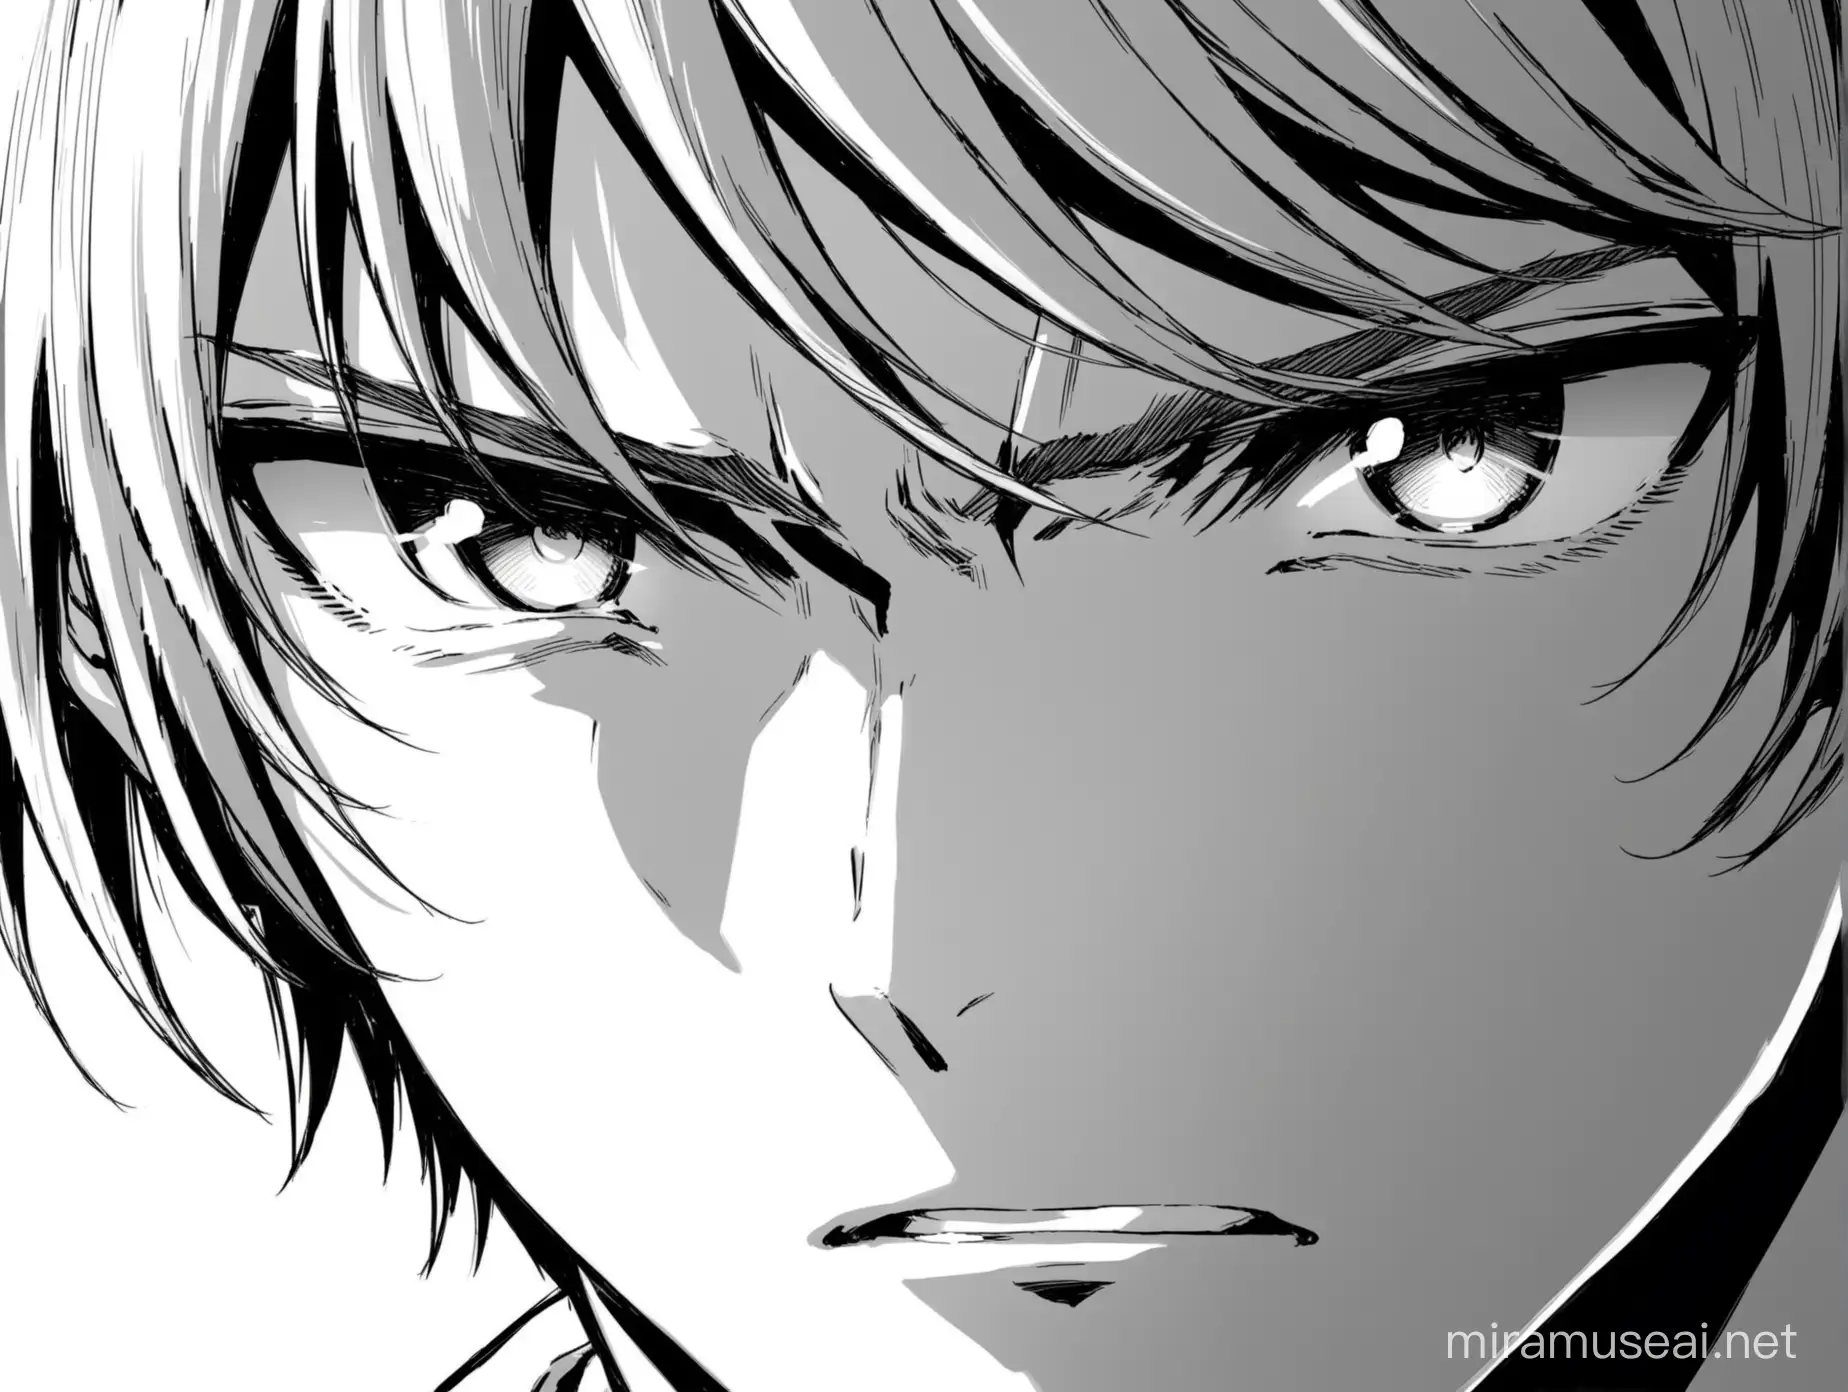 CloseUp Black and White Manga Illustration Intense Male Anime Face